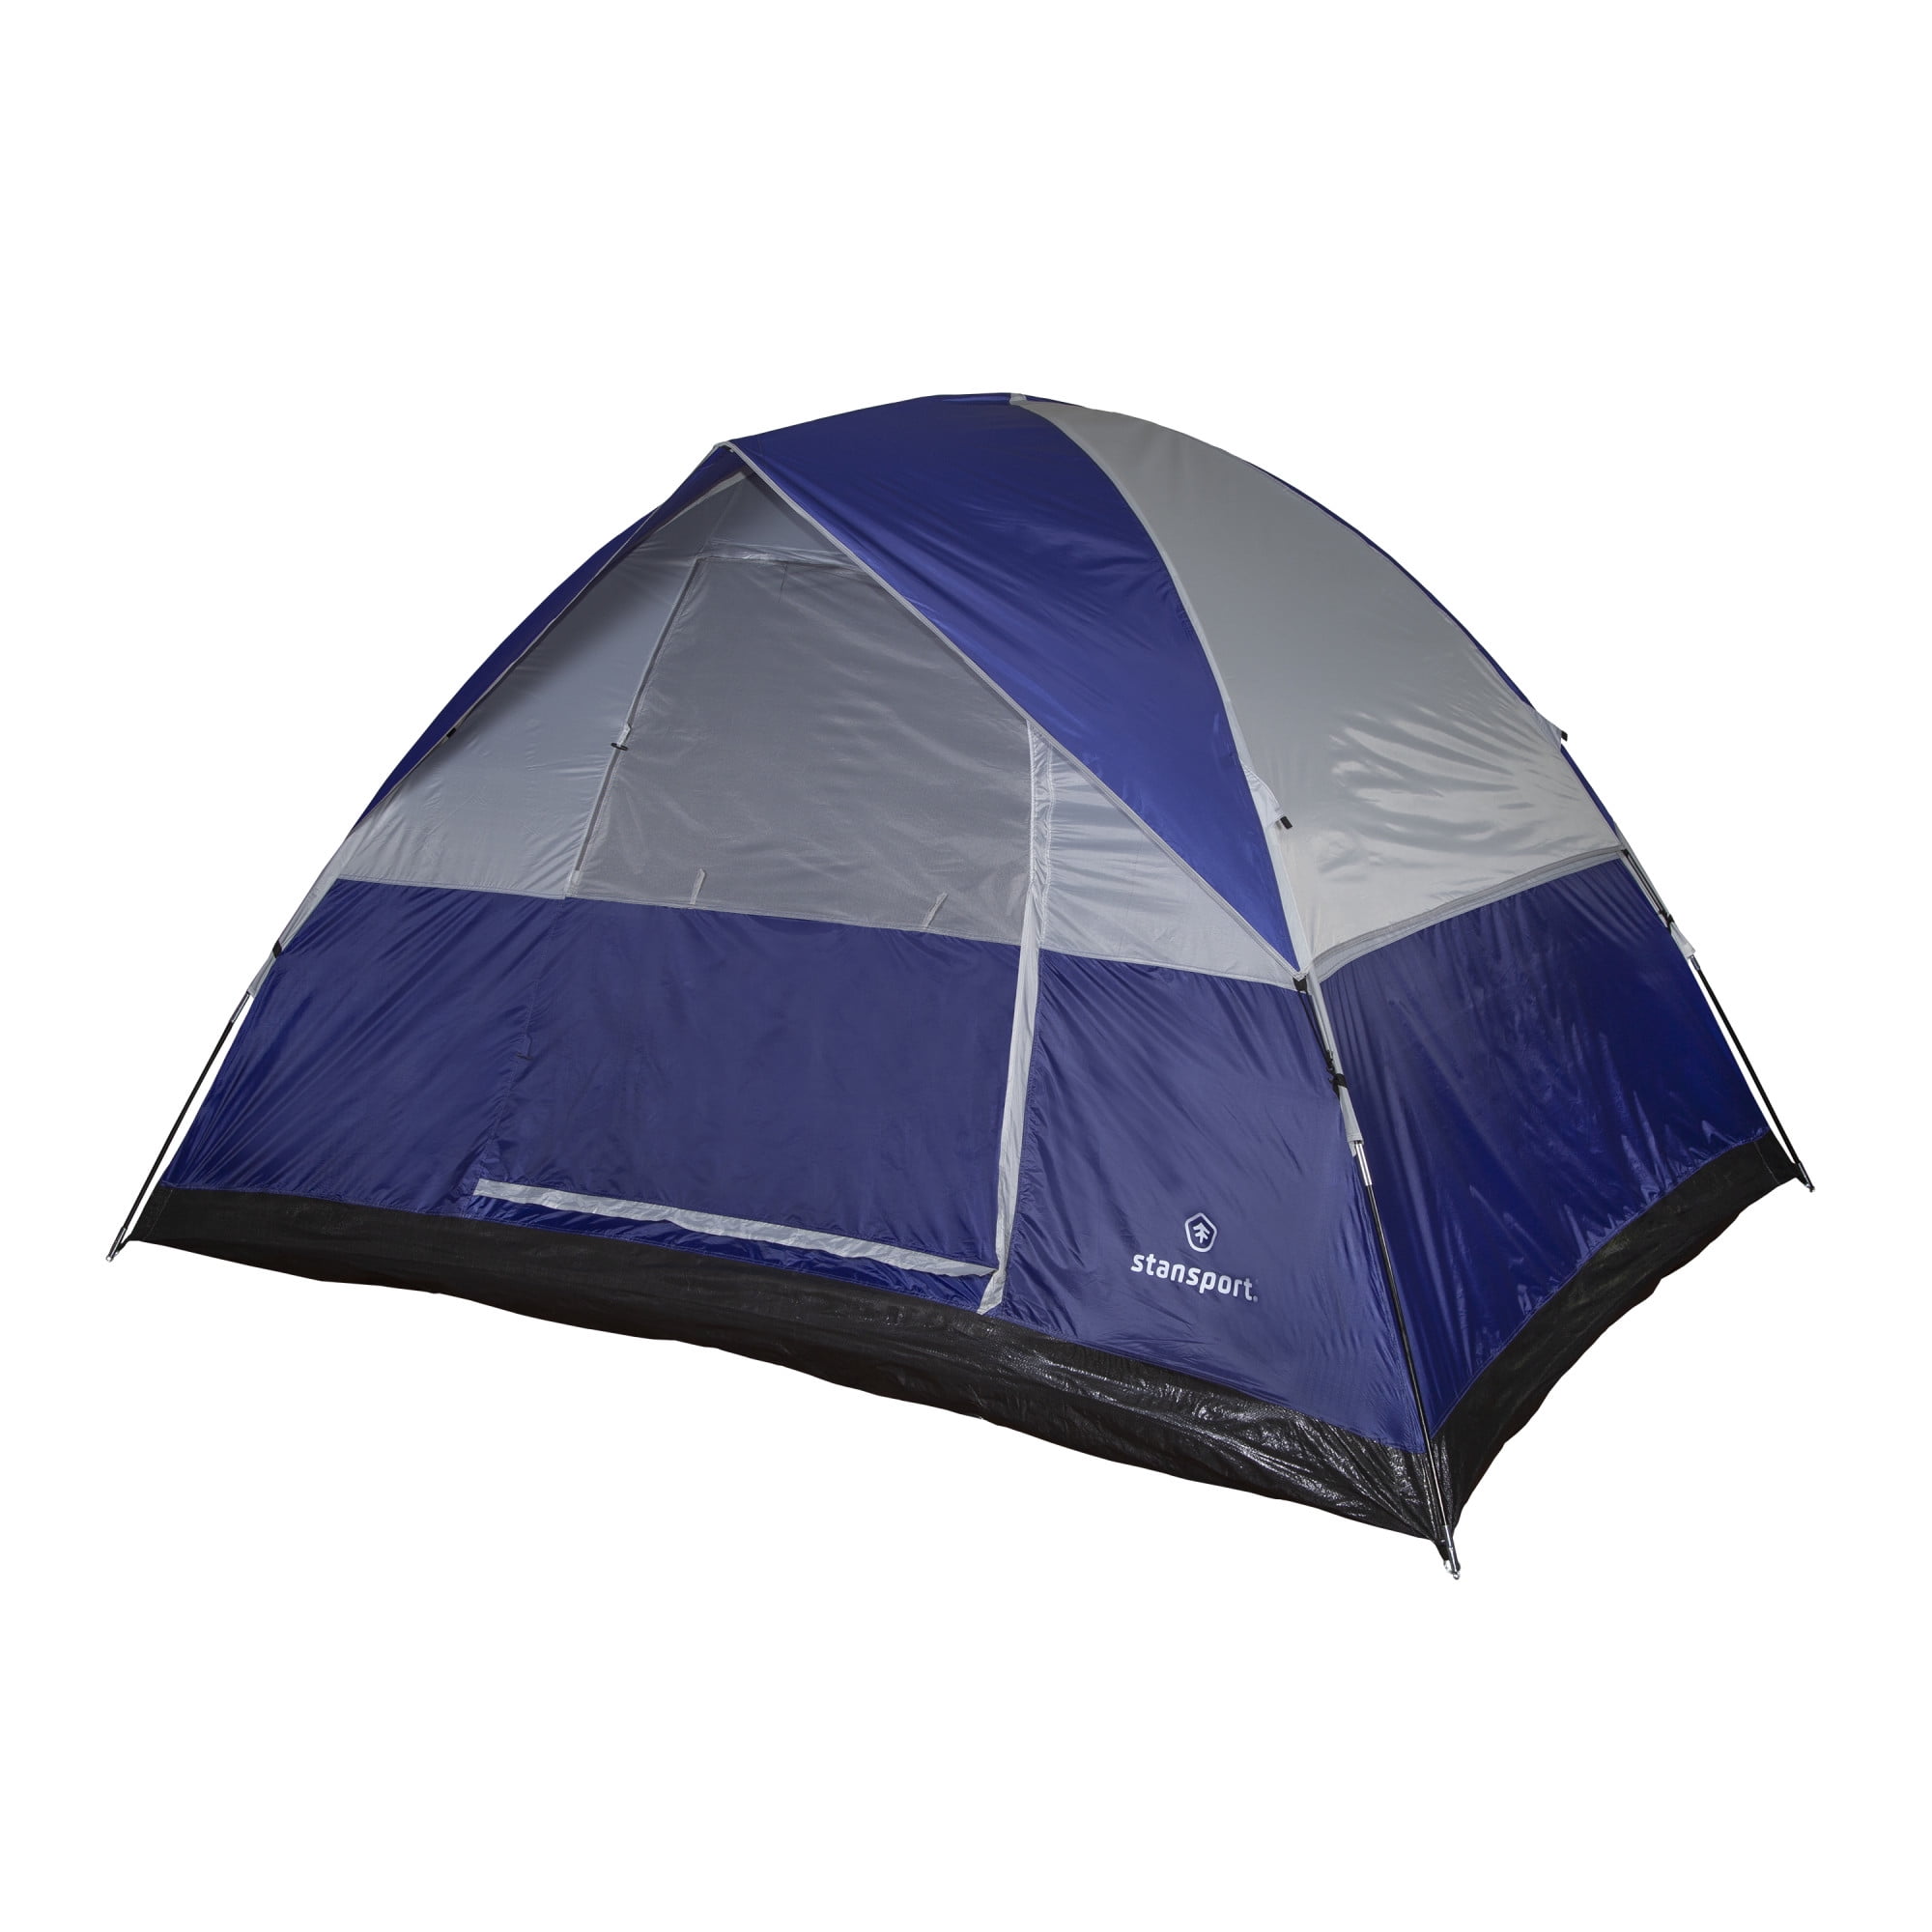 Texsport Branch Canyon Sport 10' x 7' Dome Tent, Sleeps 5 